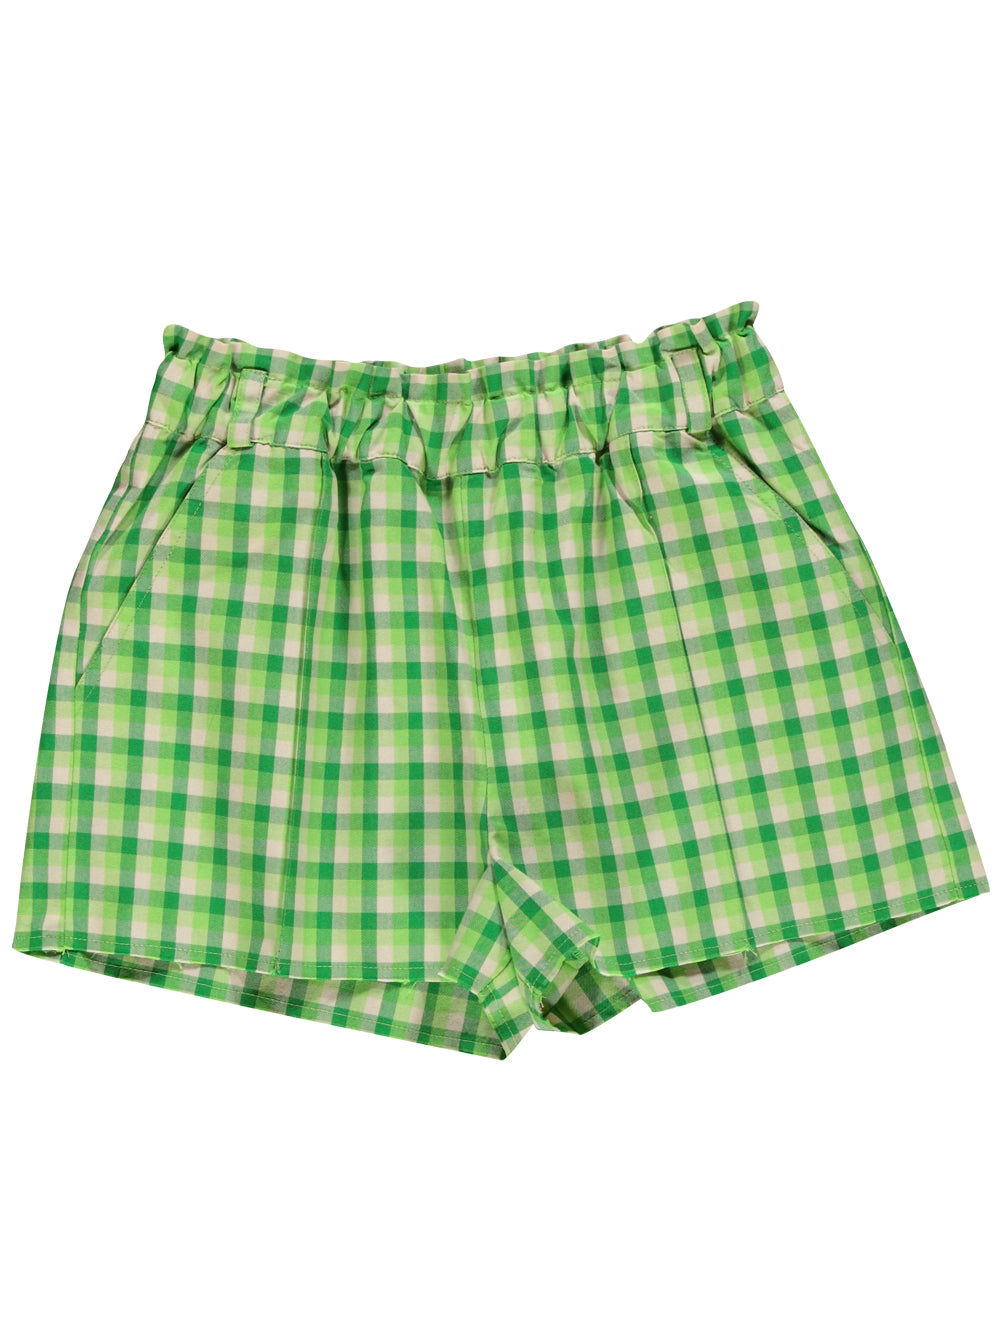 PREORDER: Green Checked Shorts